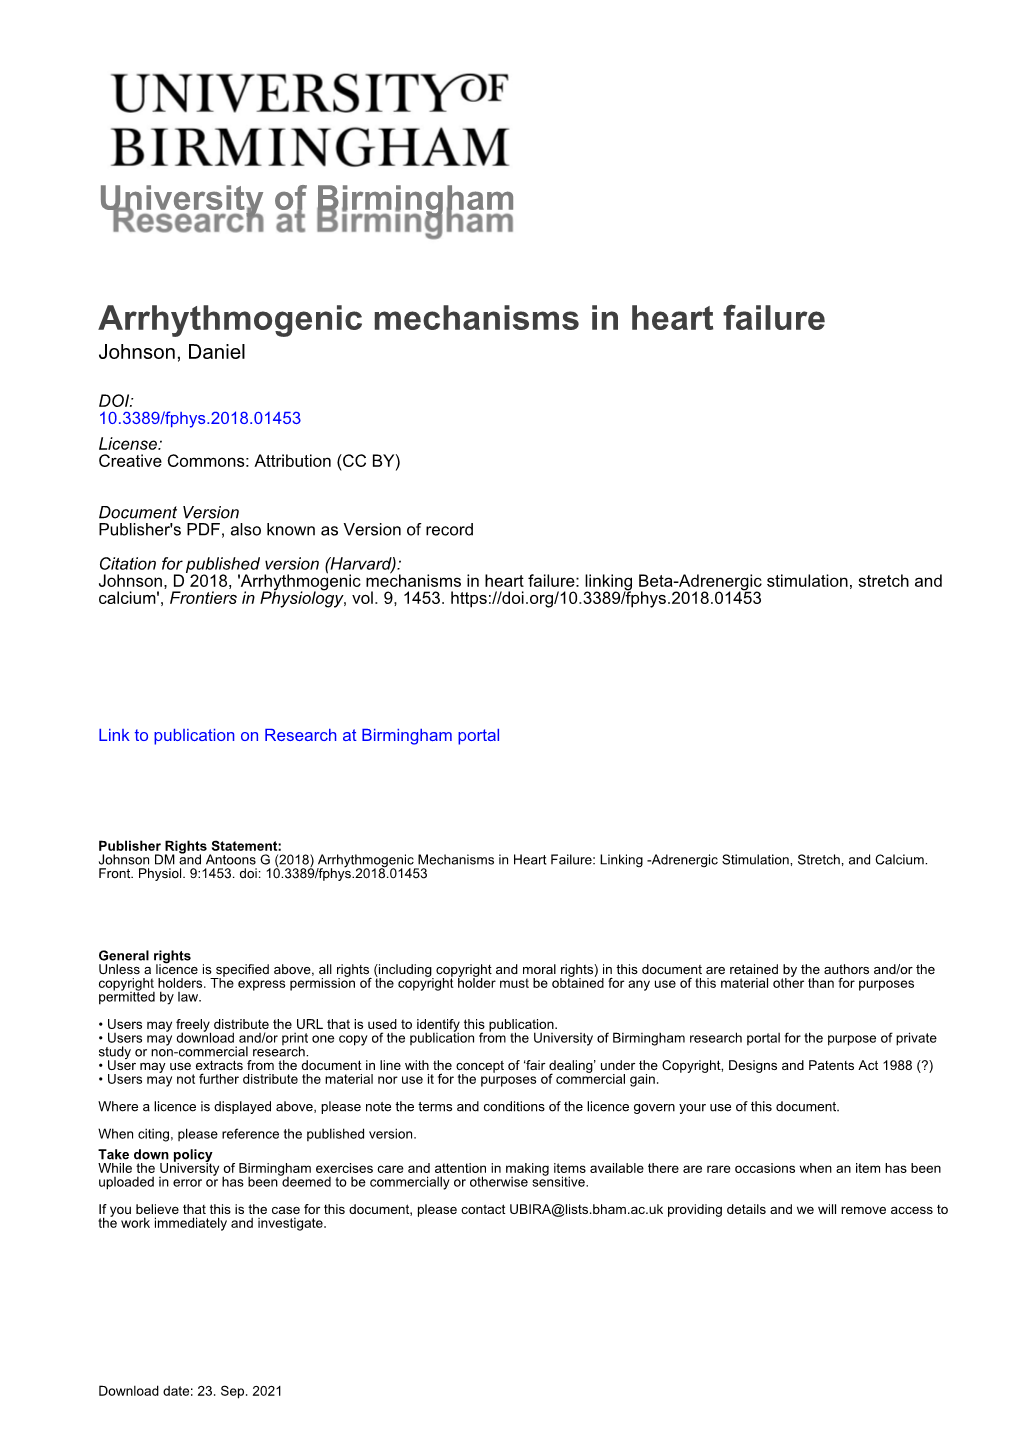 Arrhythmogenic Mechanisms in Heart Failure Johnson, Daniel